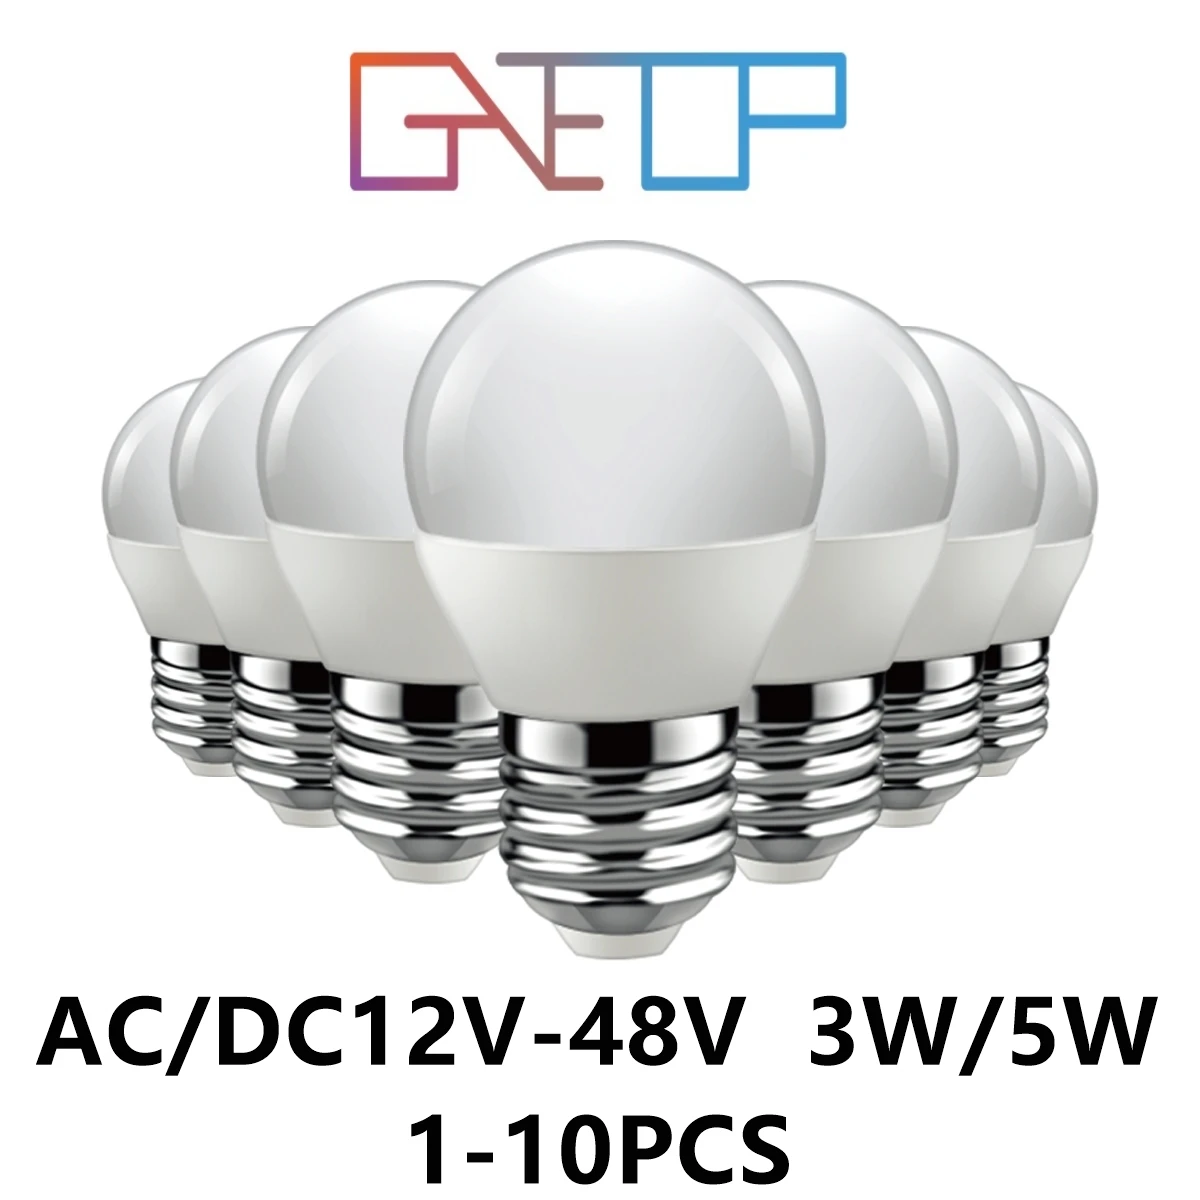 

LED Low voltage bulb G45 AC/DC 12V-48V E27 B22 Super bright warm white light 3W 5W for solar energy low voltage charger lighting